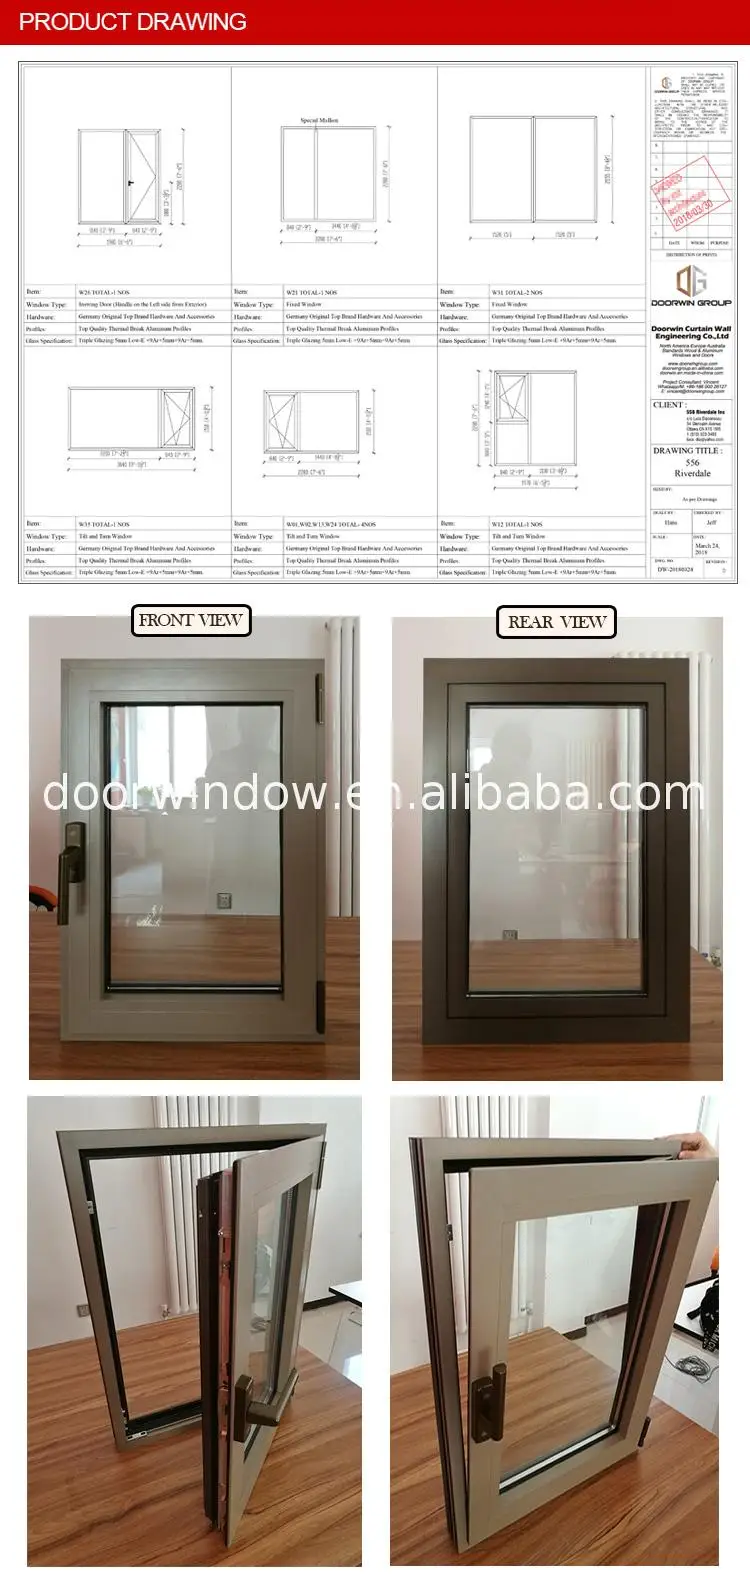 Double tempered glazing aluminium profile cladding wood tilt turn windows